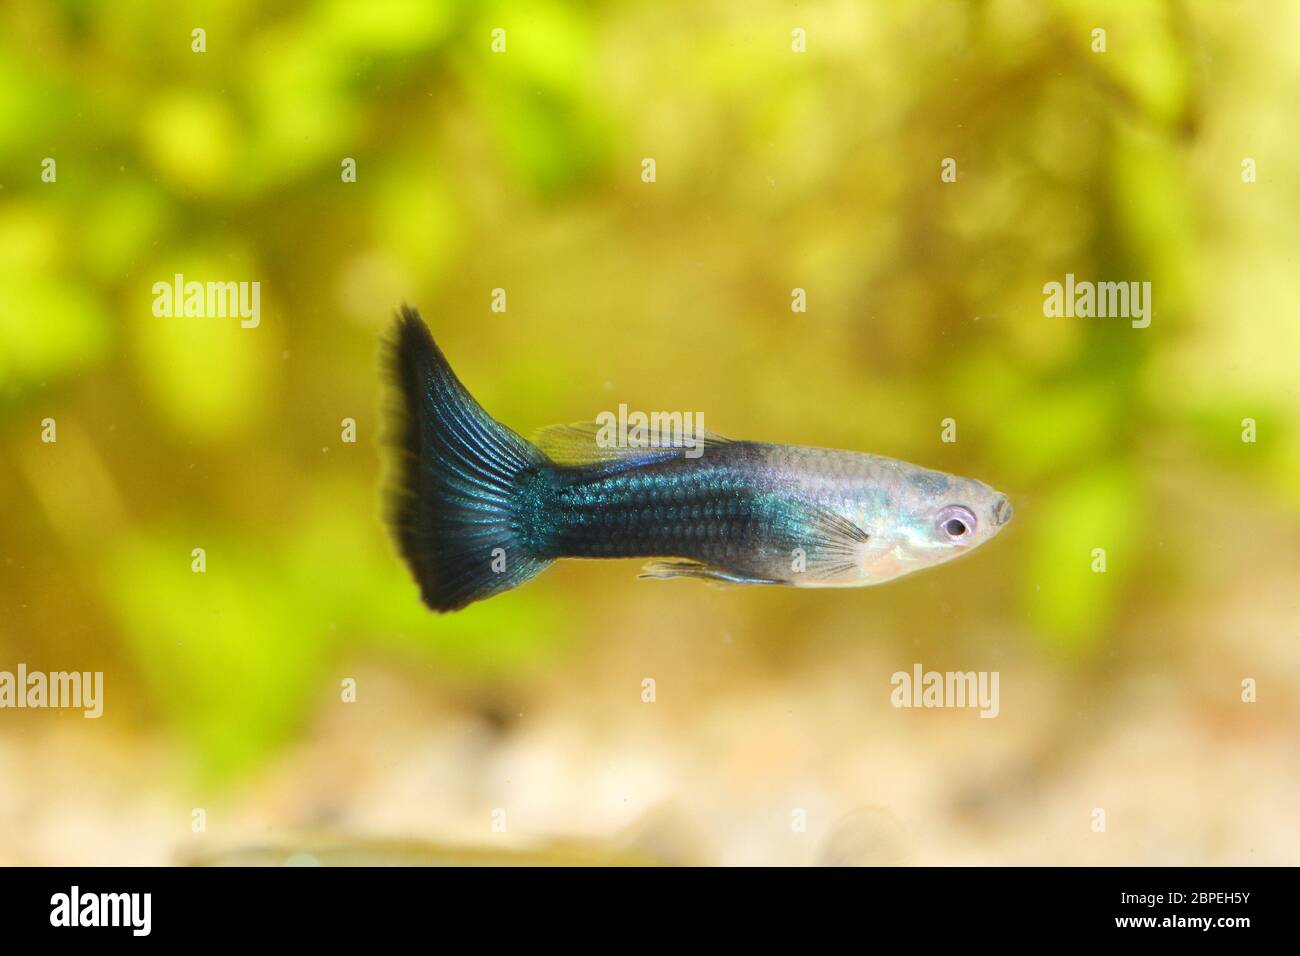 A male guppy (Poecilia reticulata), a popular freshwater aquarium fishEin männlicher Guppy, (Poecilia reticulata) ein beliebter Süßwasser-Aquarienfis Stock Photo